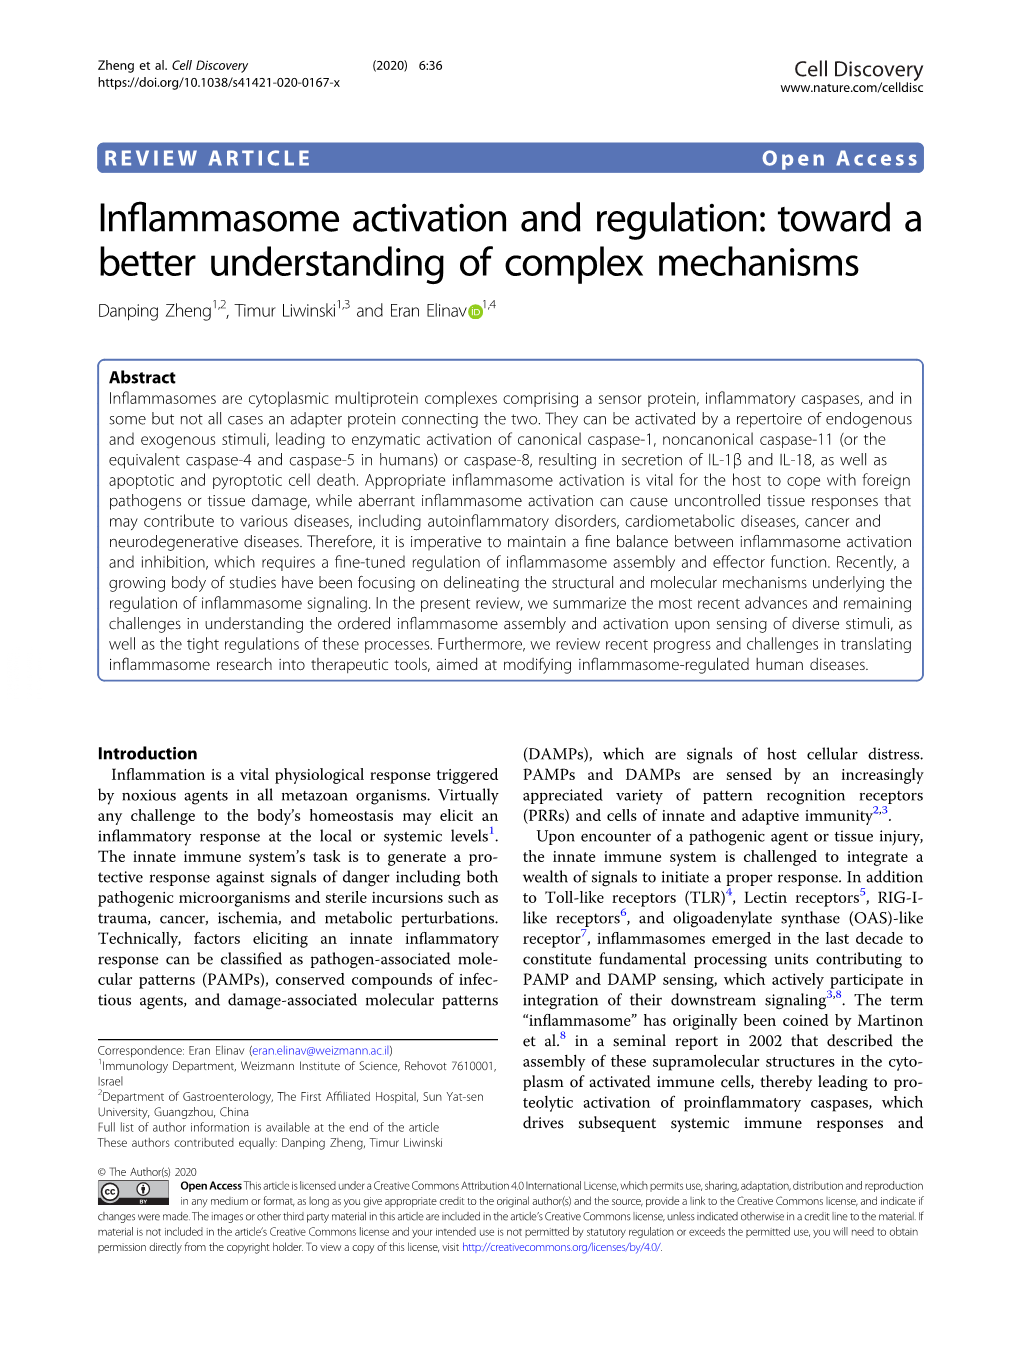 Inflammasome Activation and Regulation